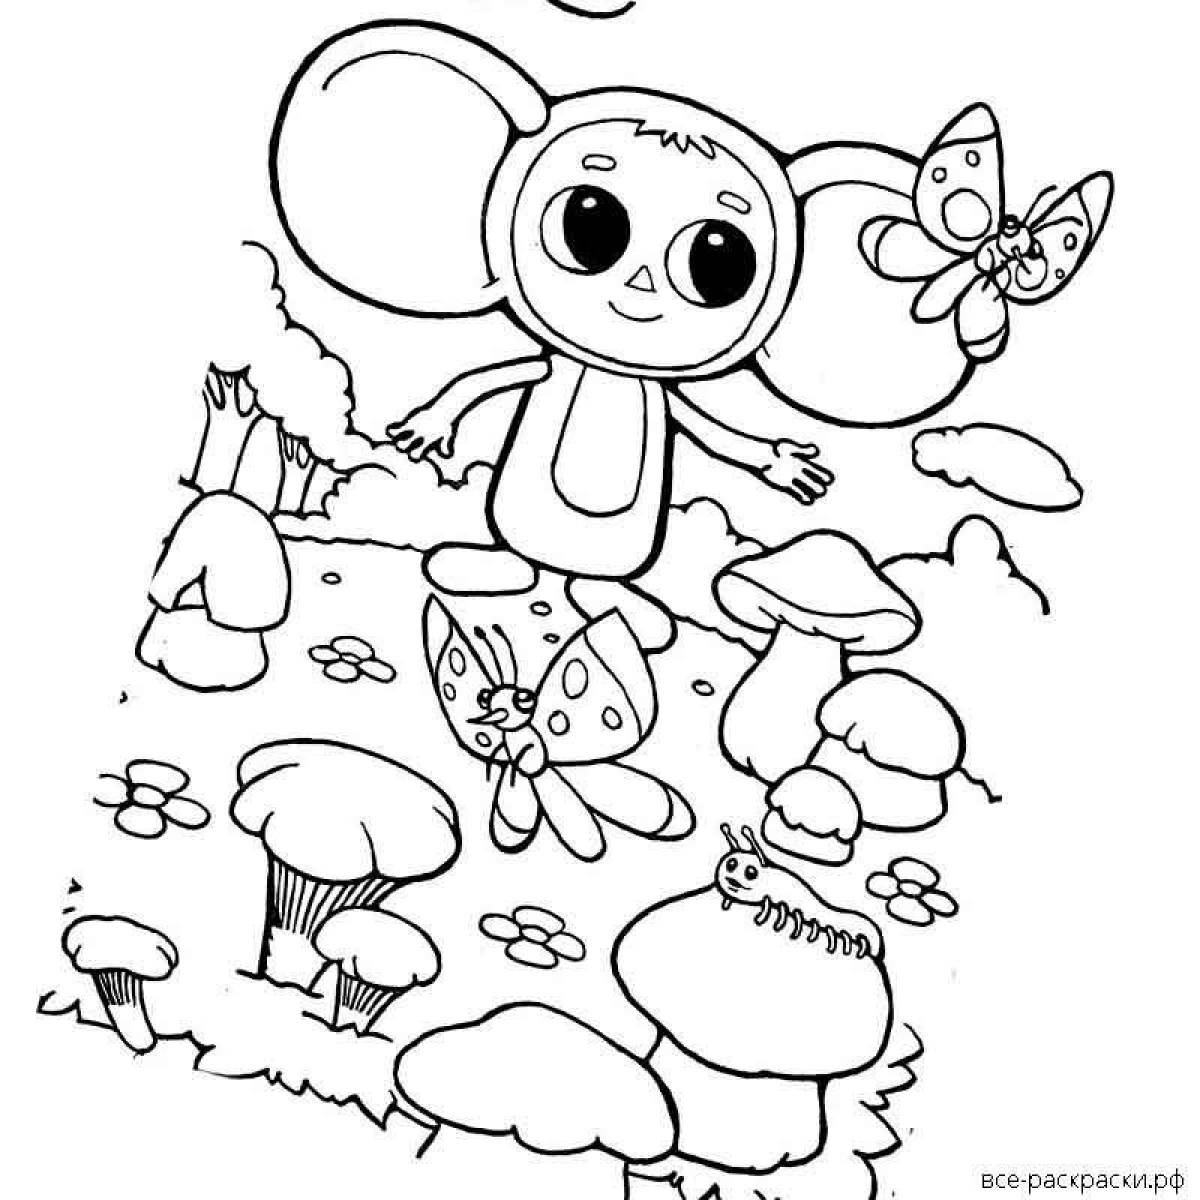 Coloring page joyful cheburashka